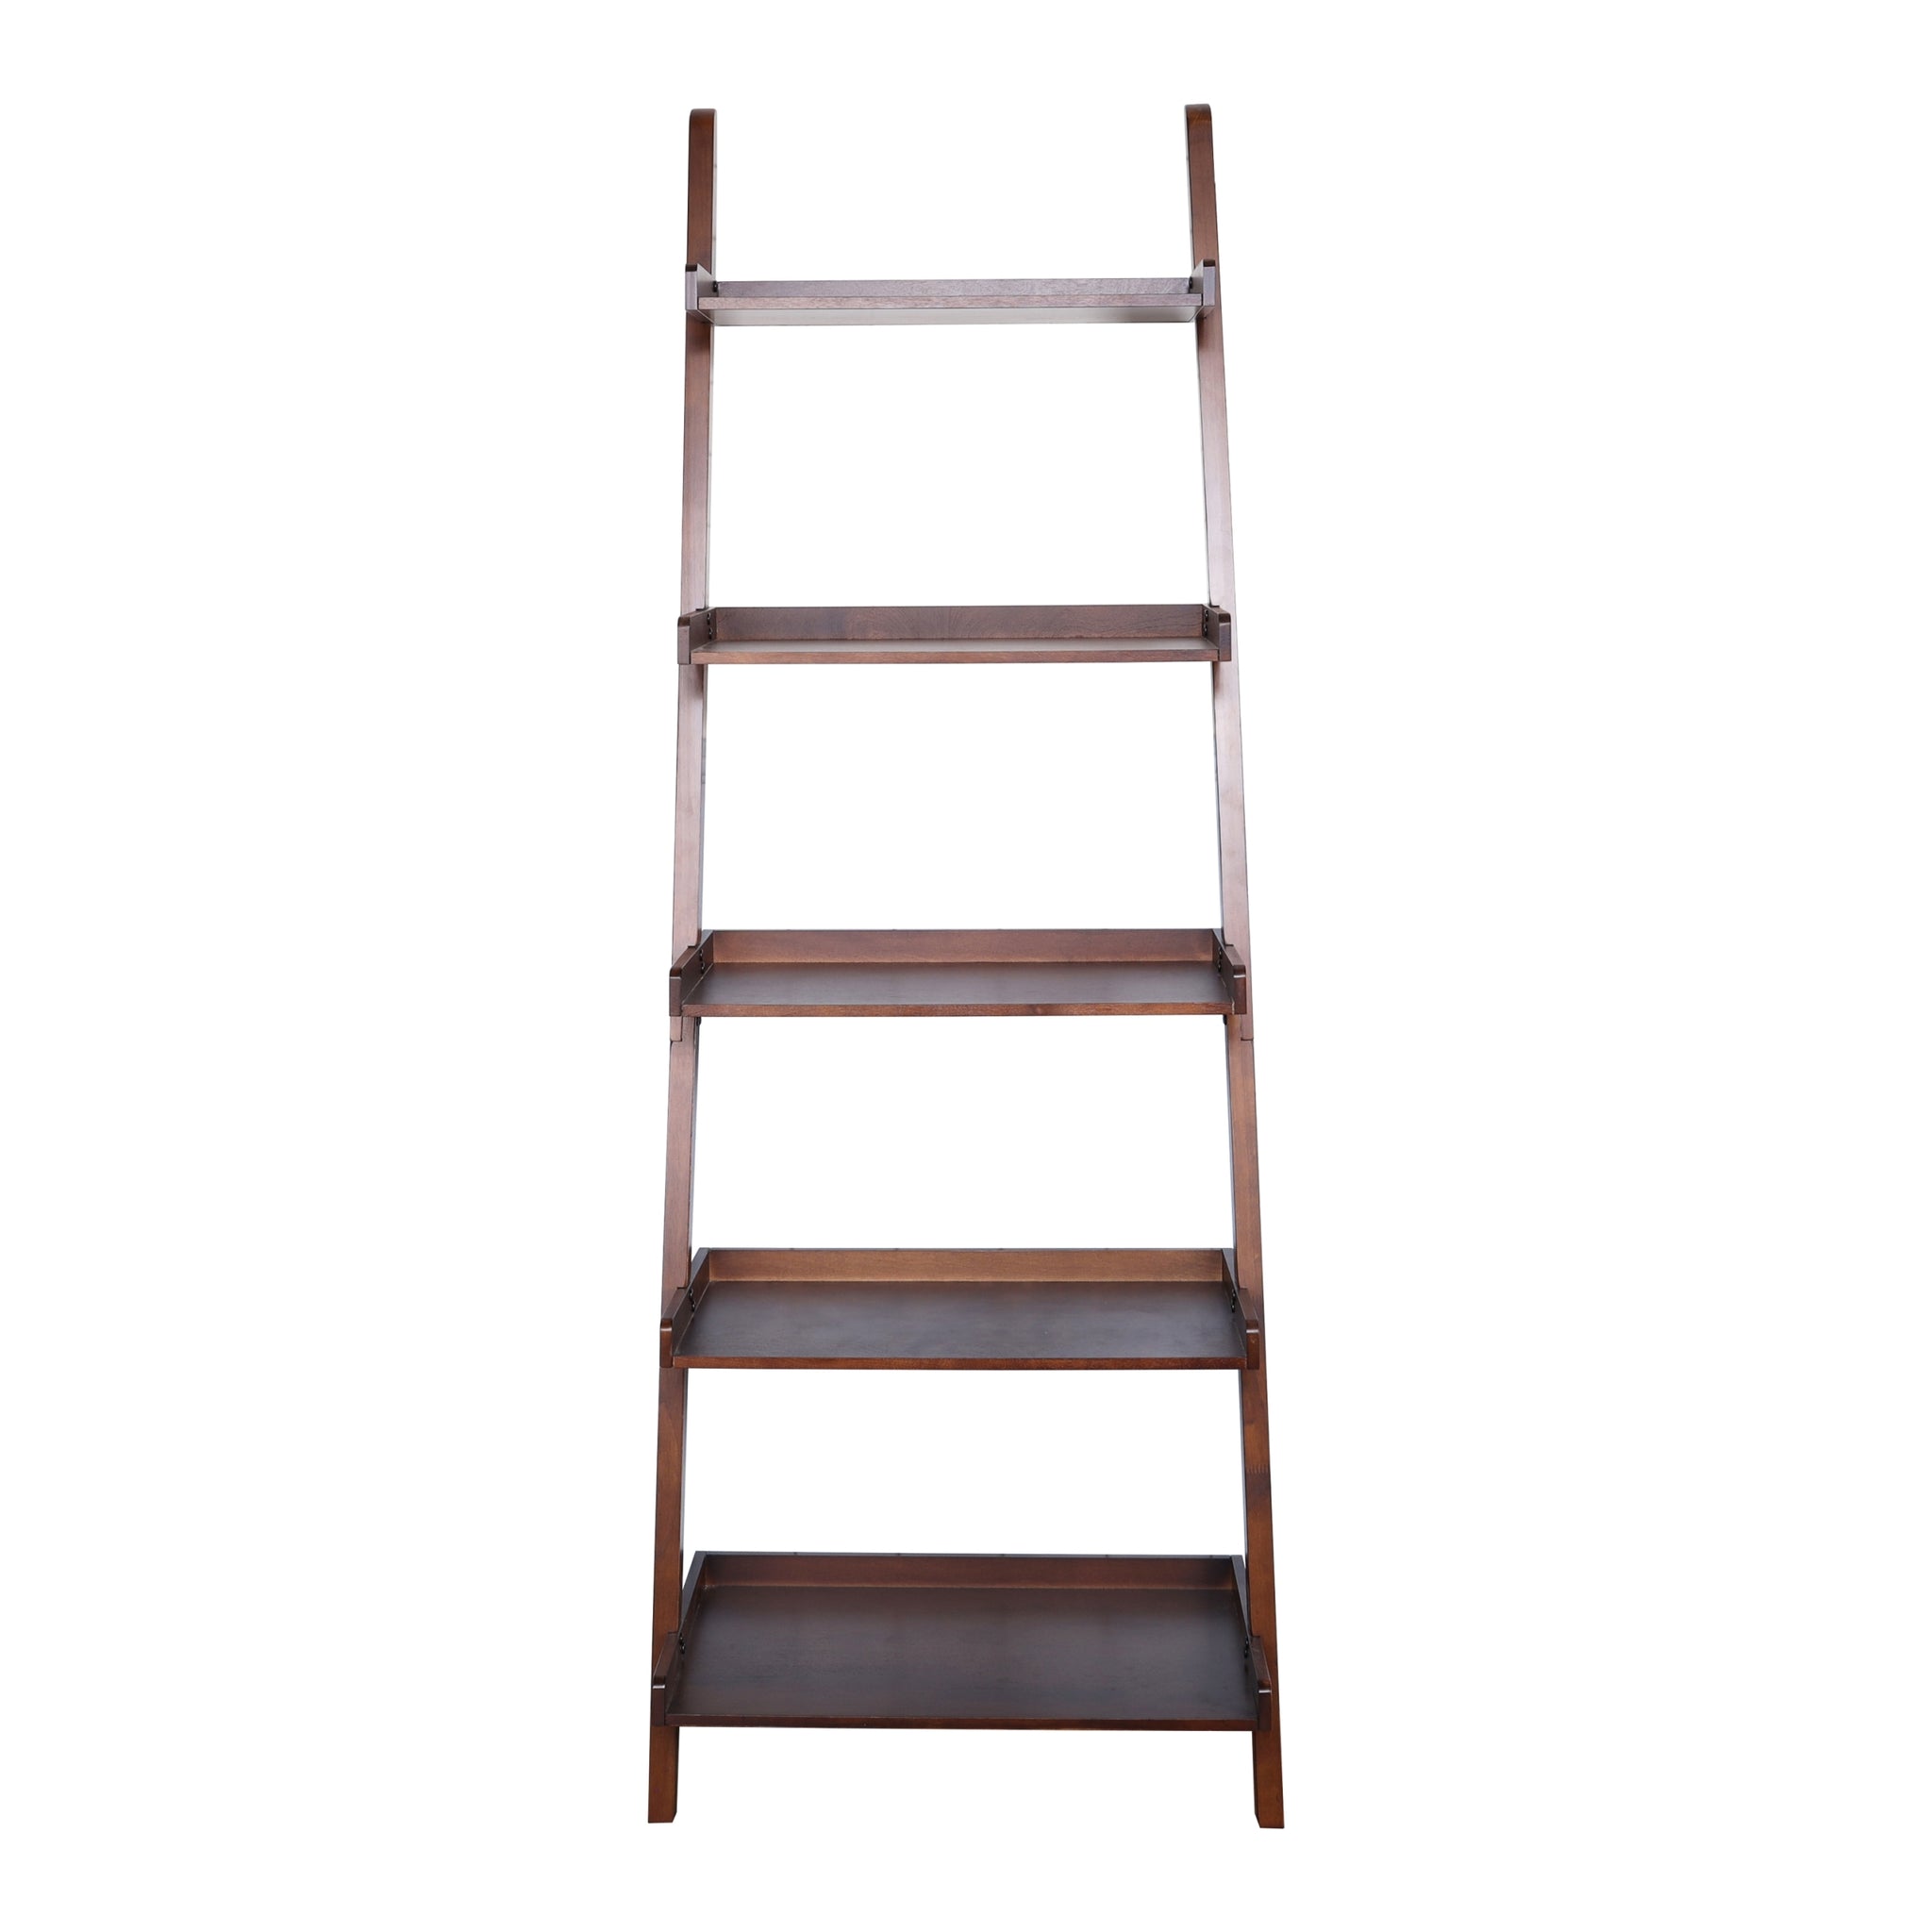 5 Tier Ladder Shelf brown-wood